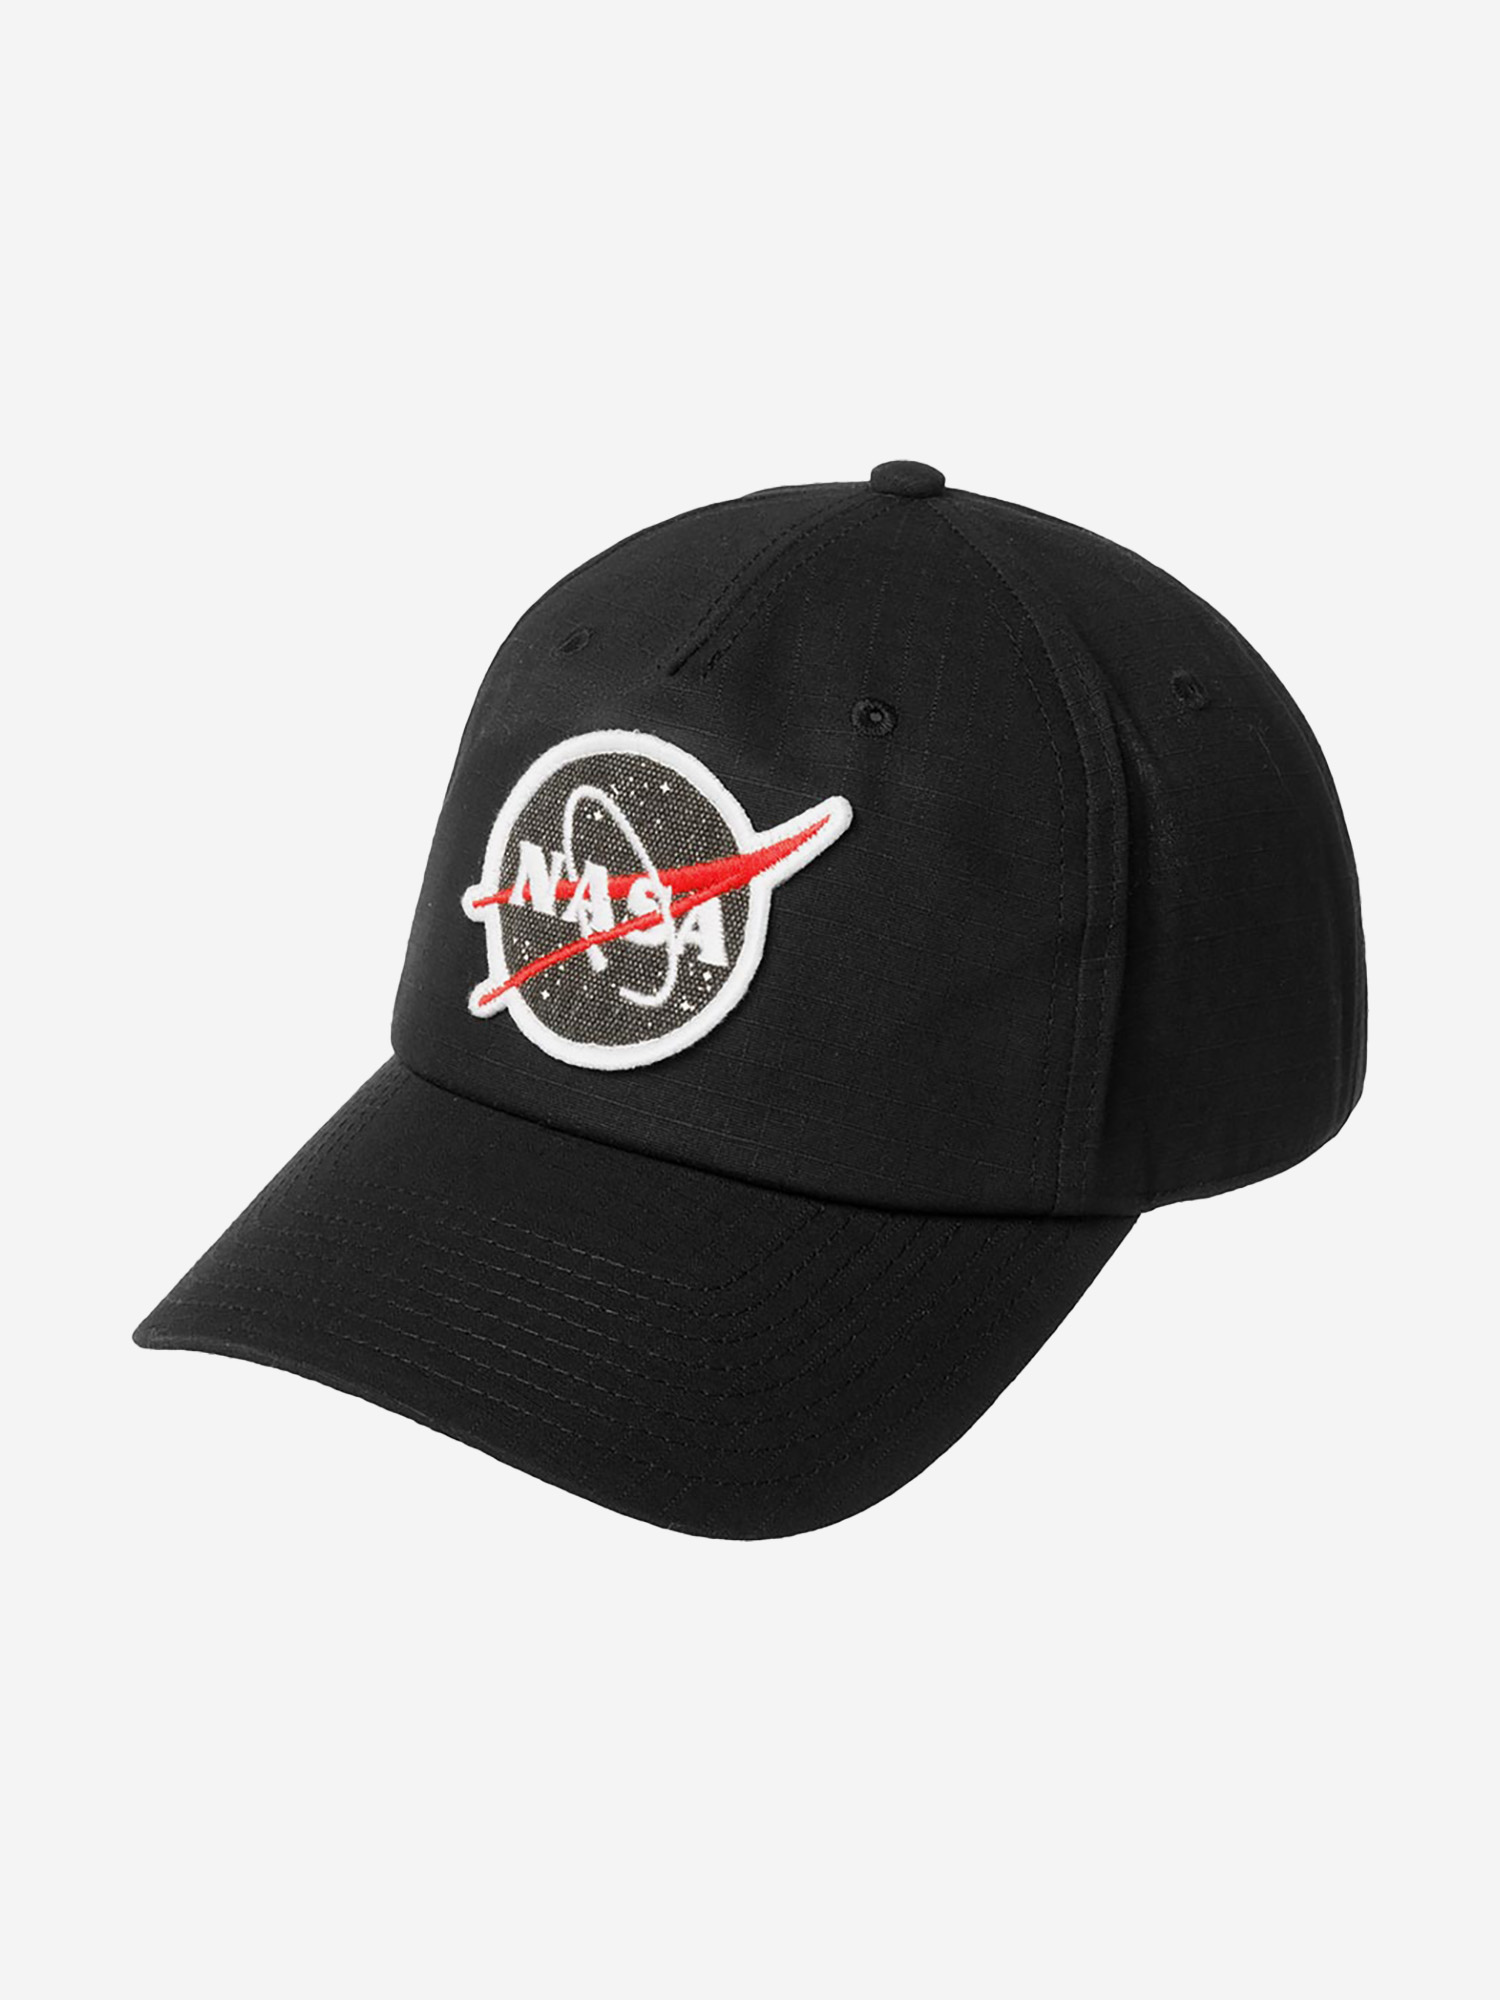 Бейсболка AMERICAN NEEDLE 45060A-NASA Space with NASA Surplus (черный), Черный бейсболки cl nasa 1 nas5 nasa